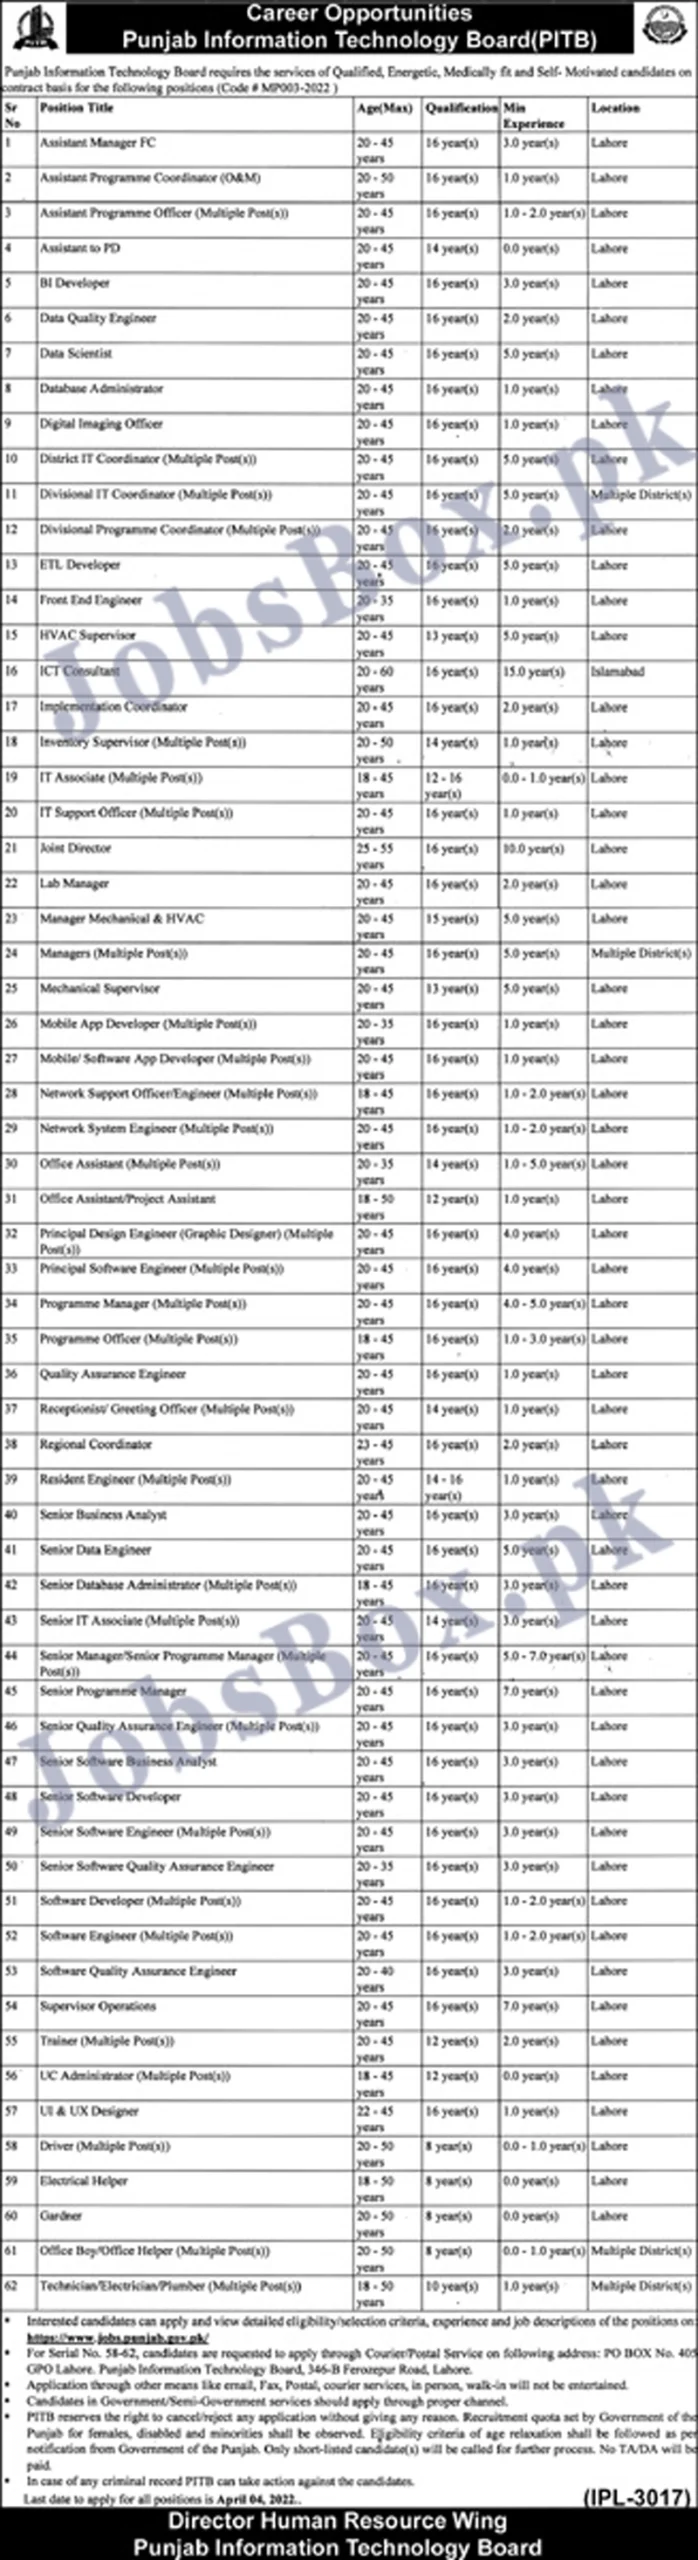 Punjab Information Technology Board PITB Jobs 2022